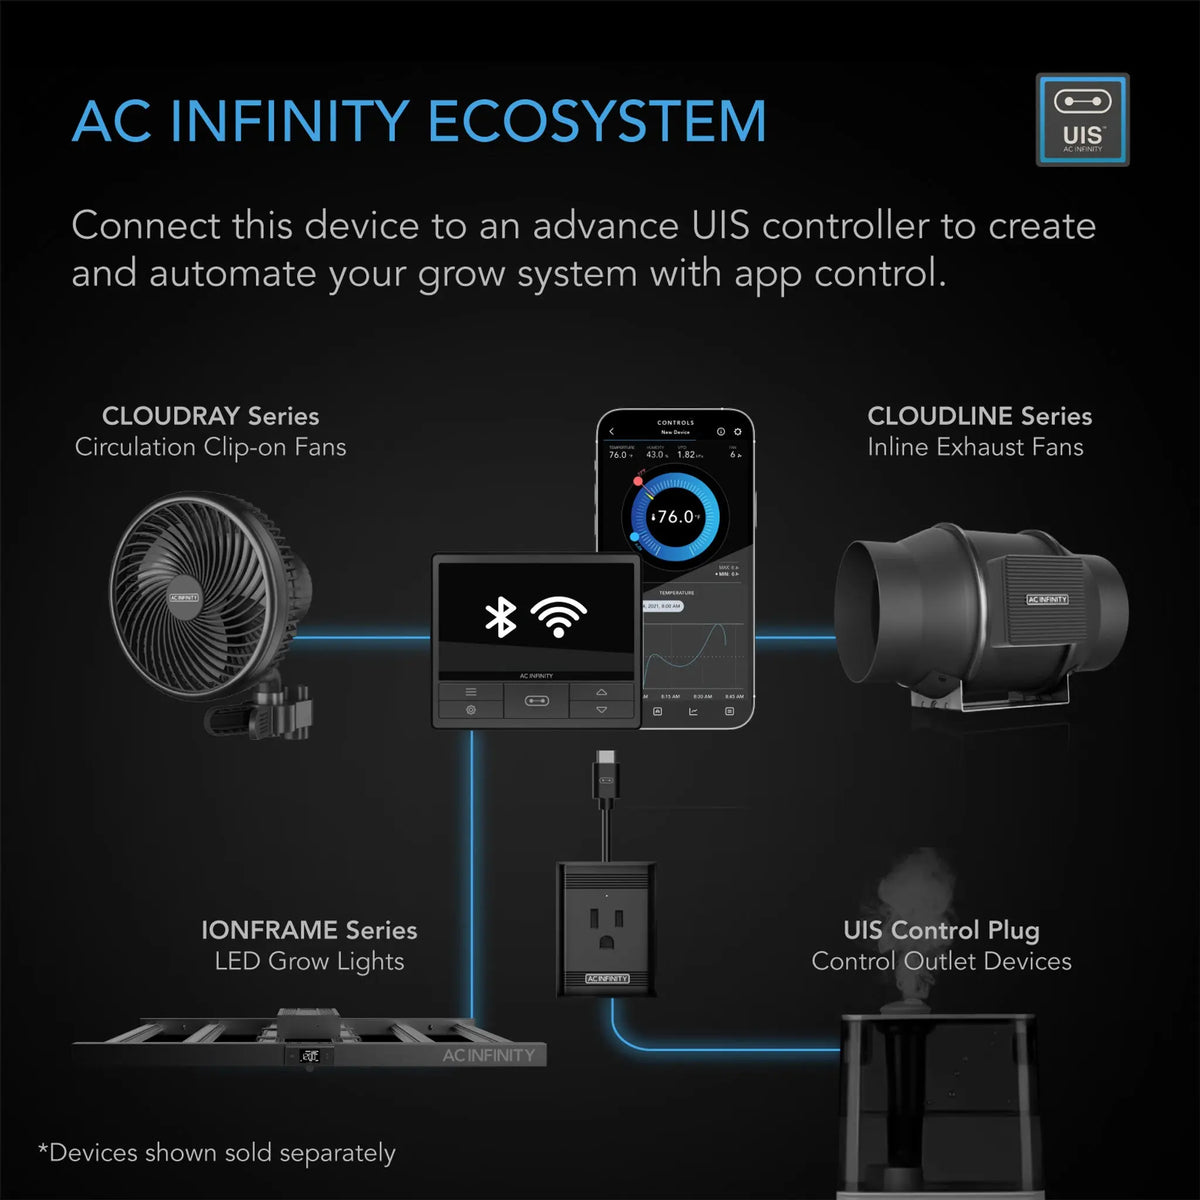 AC Infinity IONFRAME EVO10, Samsung LM301H EVO Commercial LED Grow Light 5x5’, 1000W